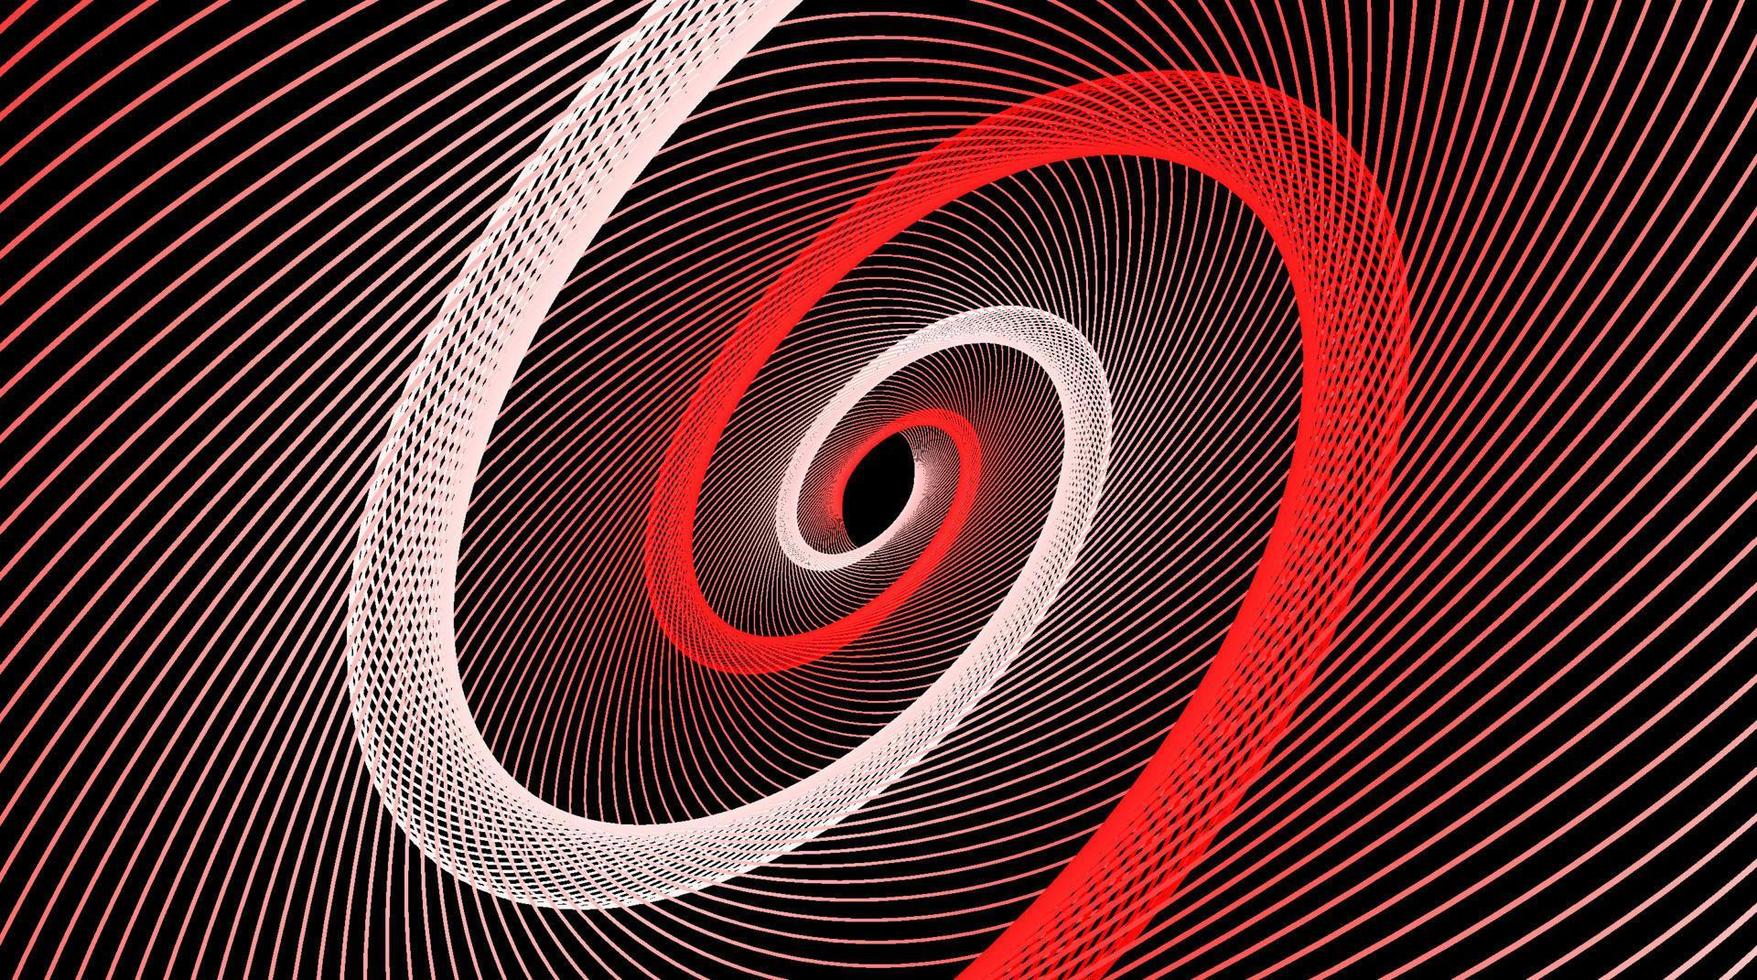 Colorful Hypnotic spiral vector illustration